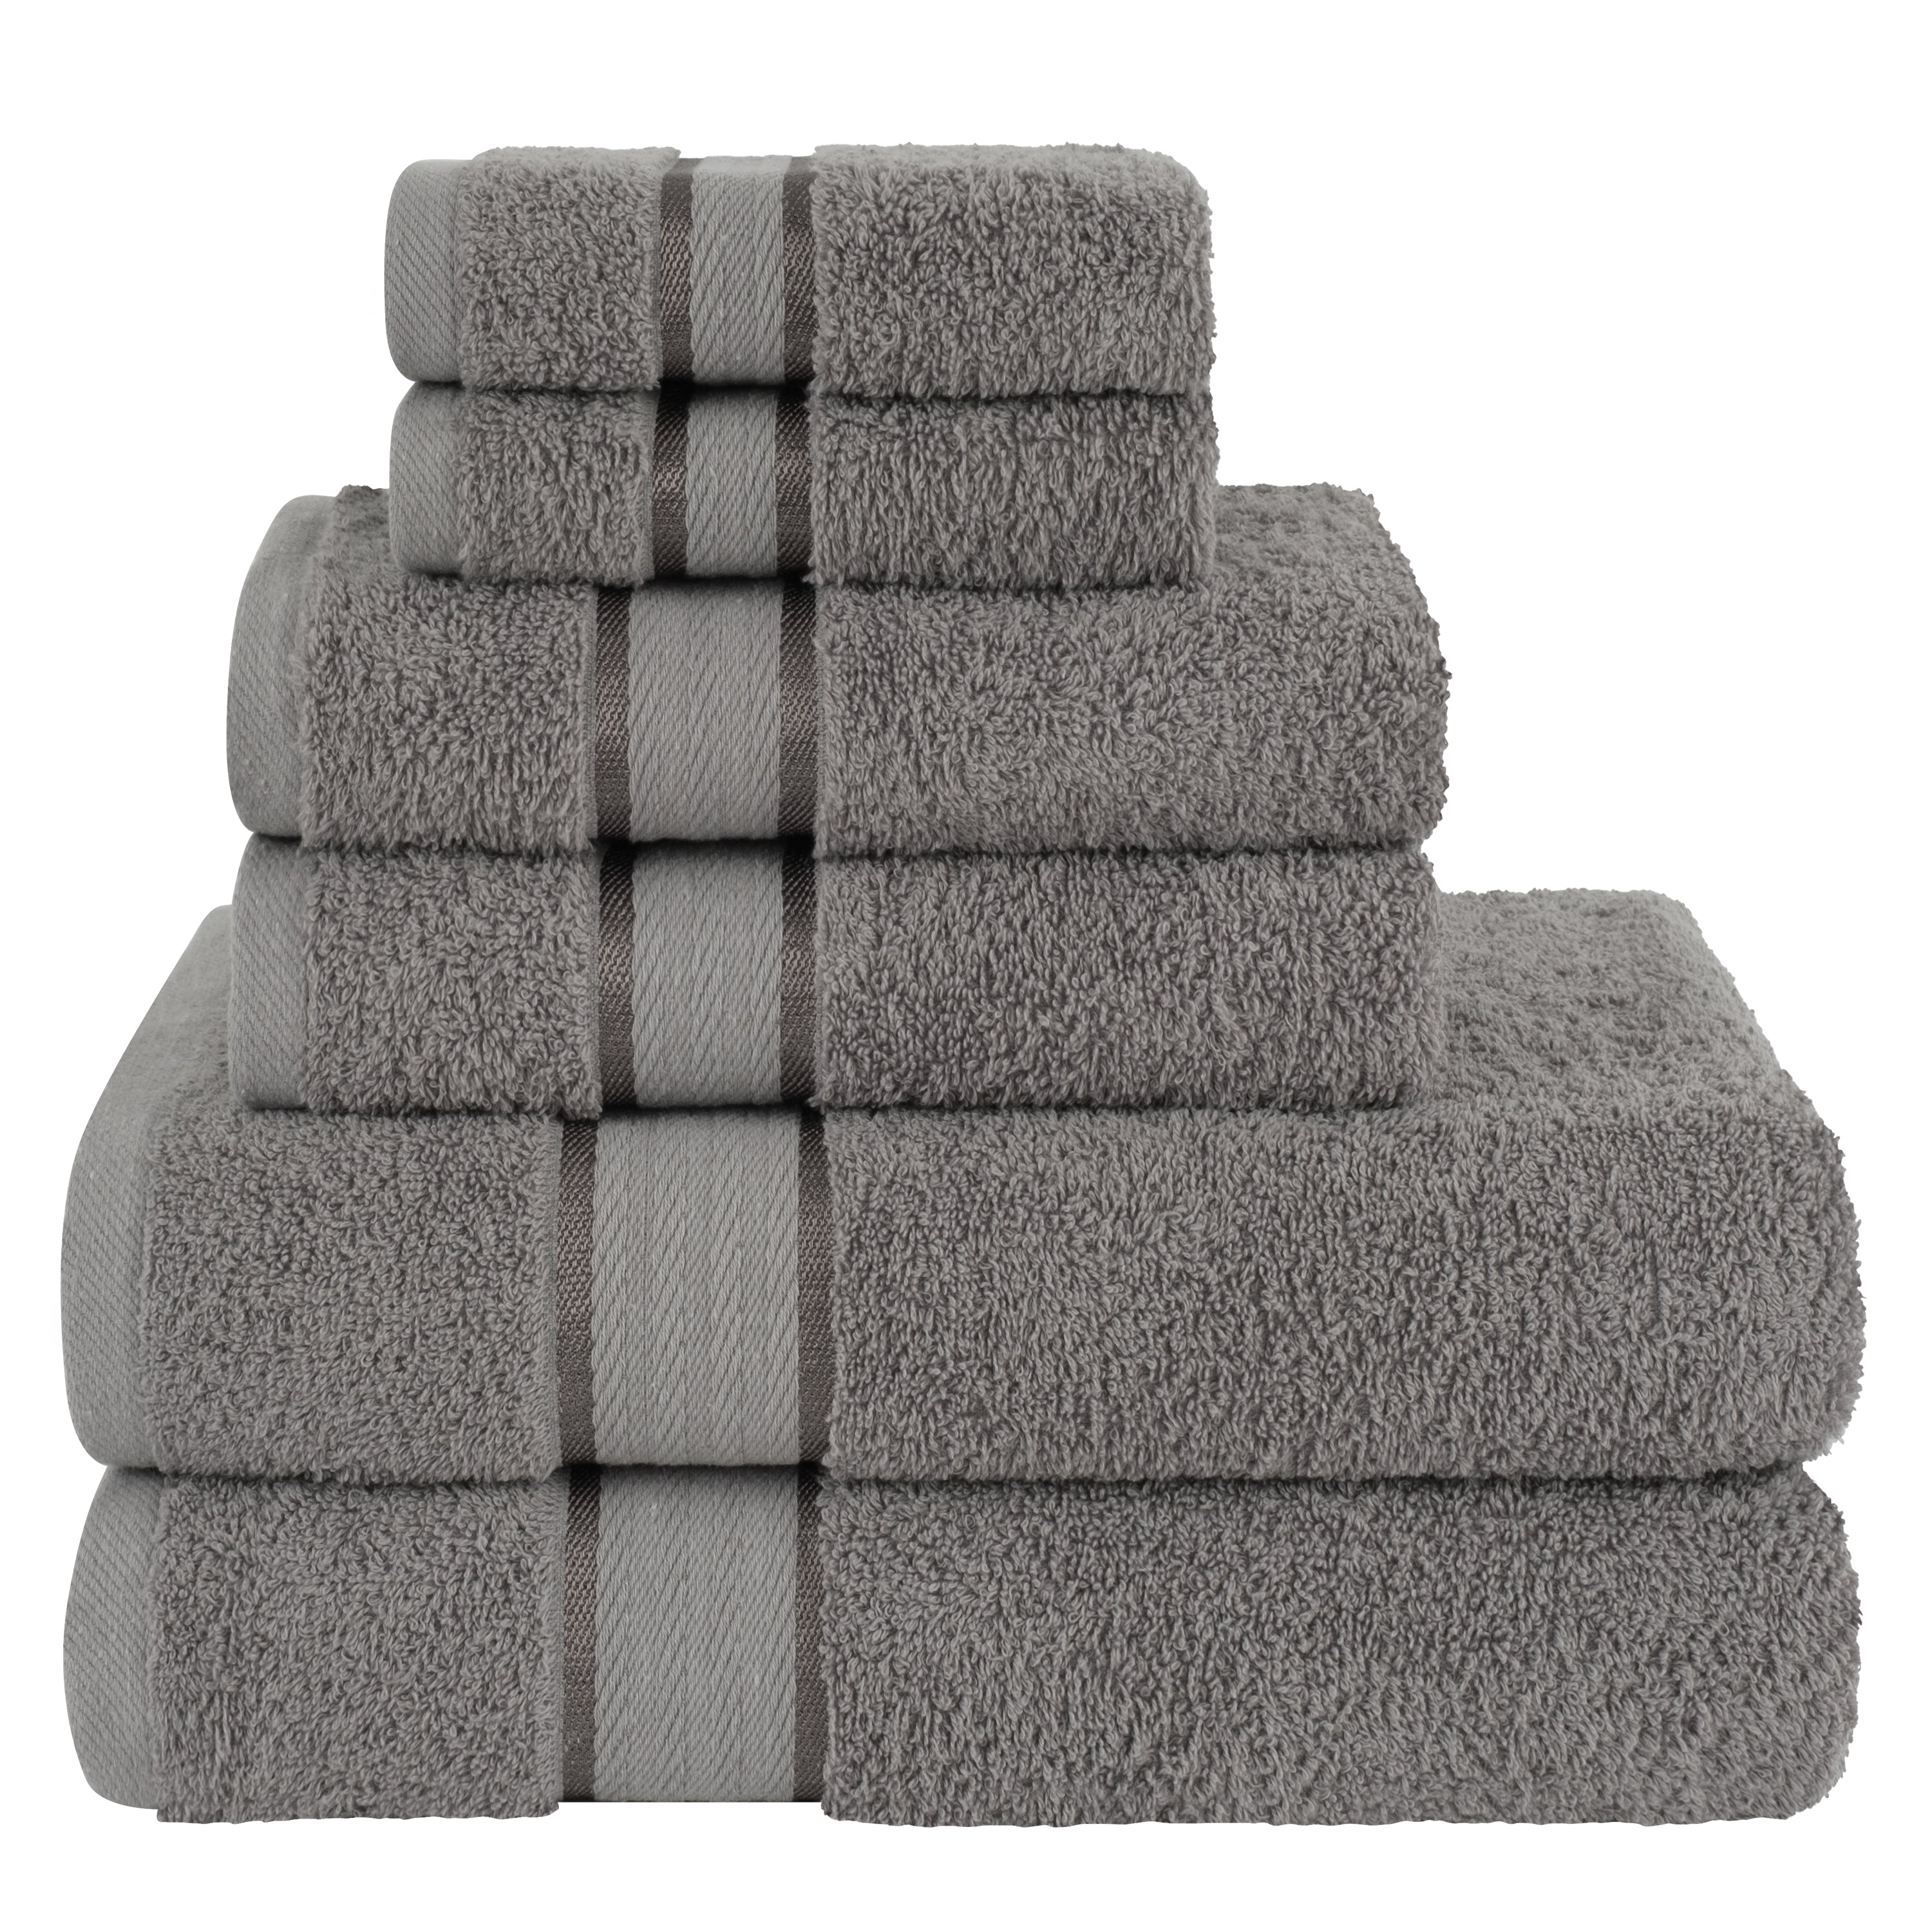 American Soft Linen - Salem 6 Piece Turkish Cotton Luxury Towel Set - Gray - 0